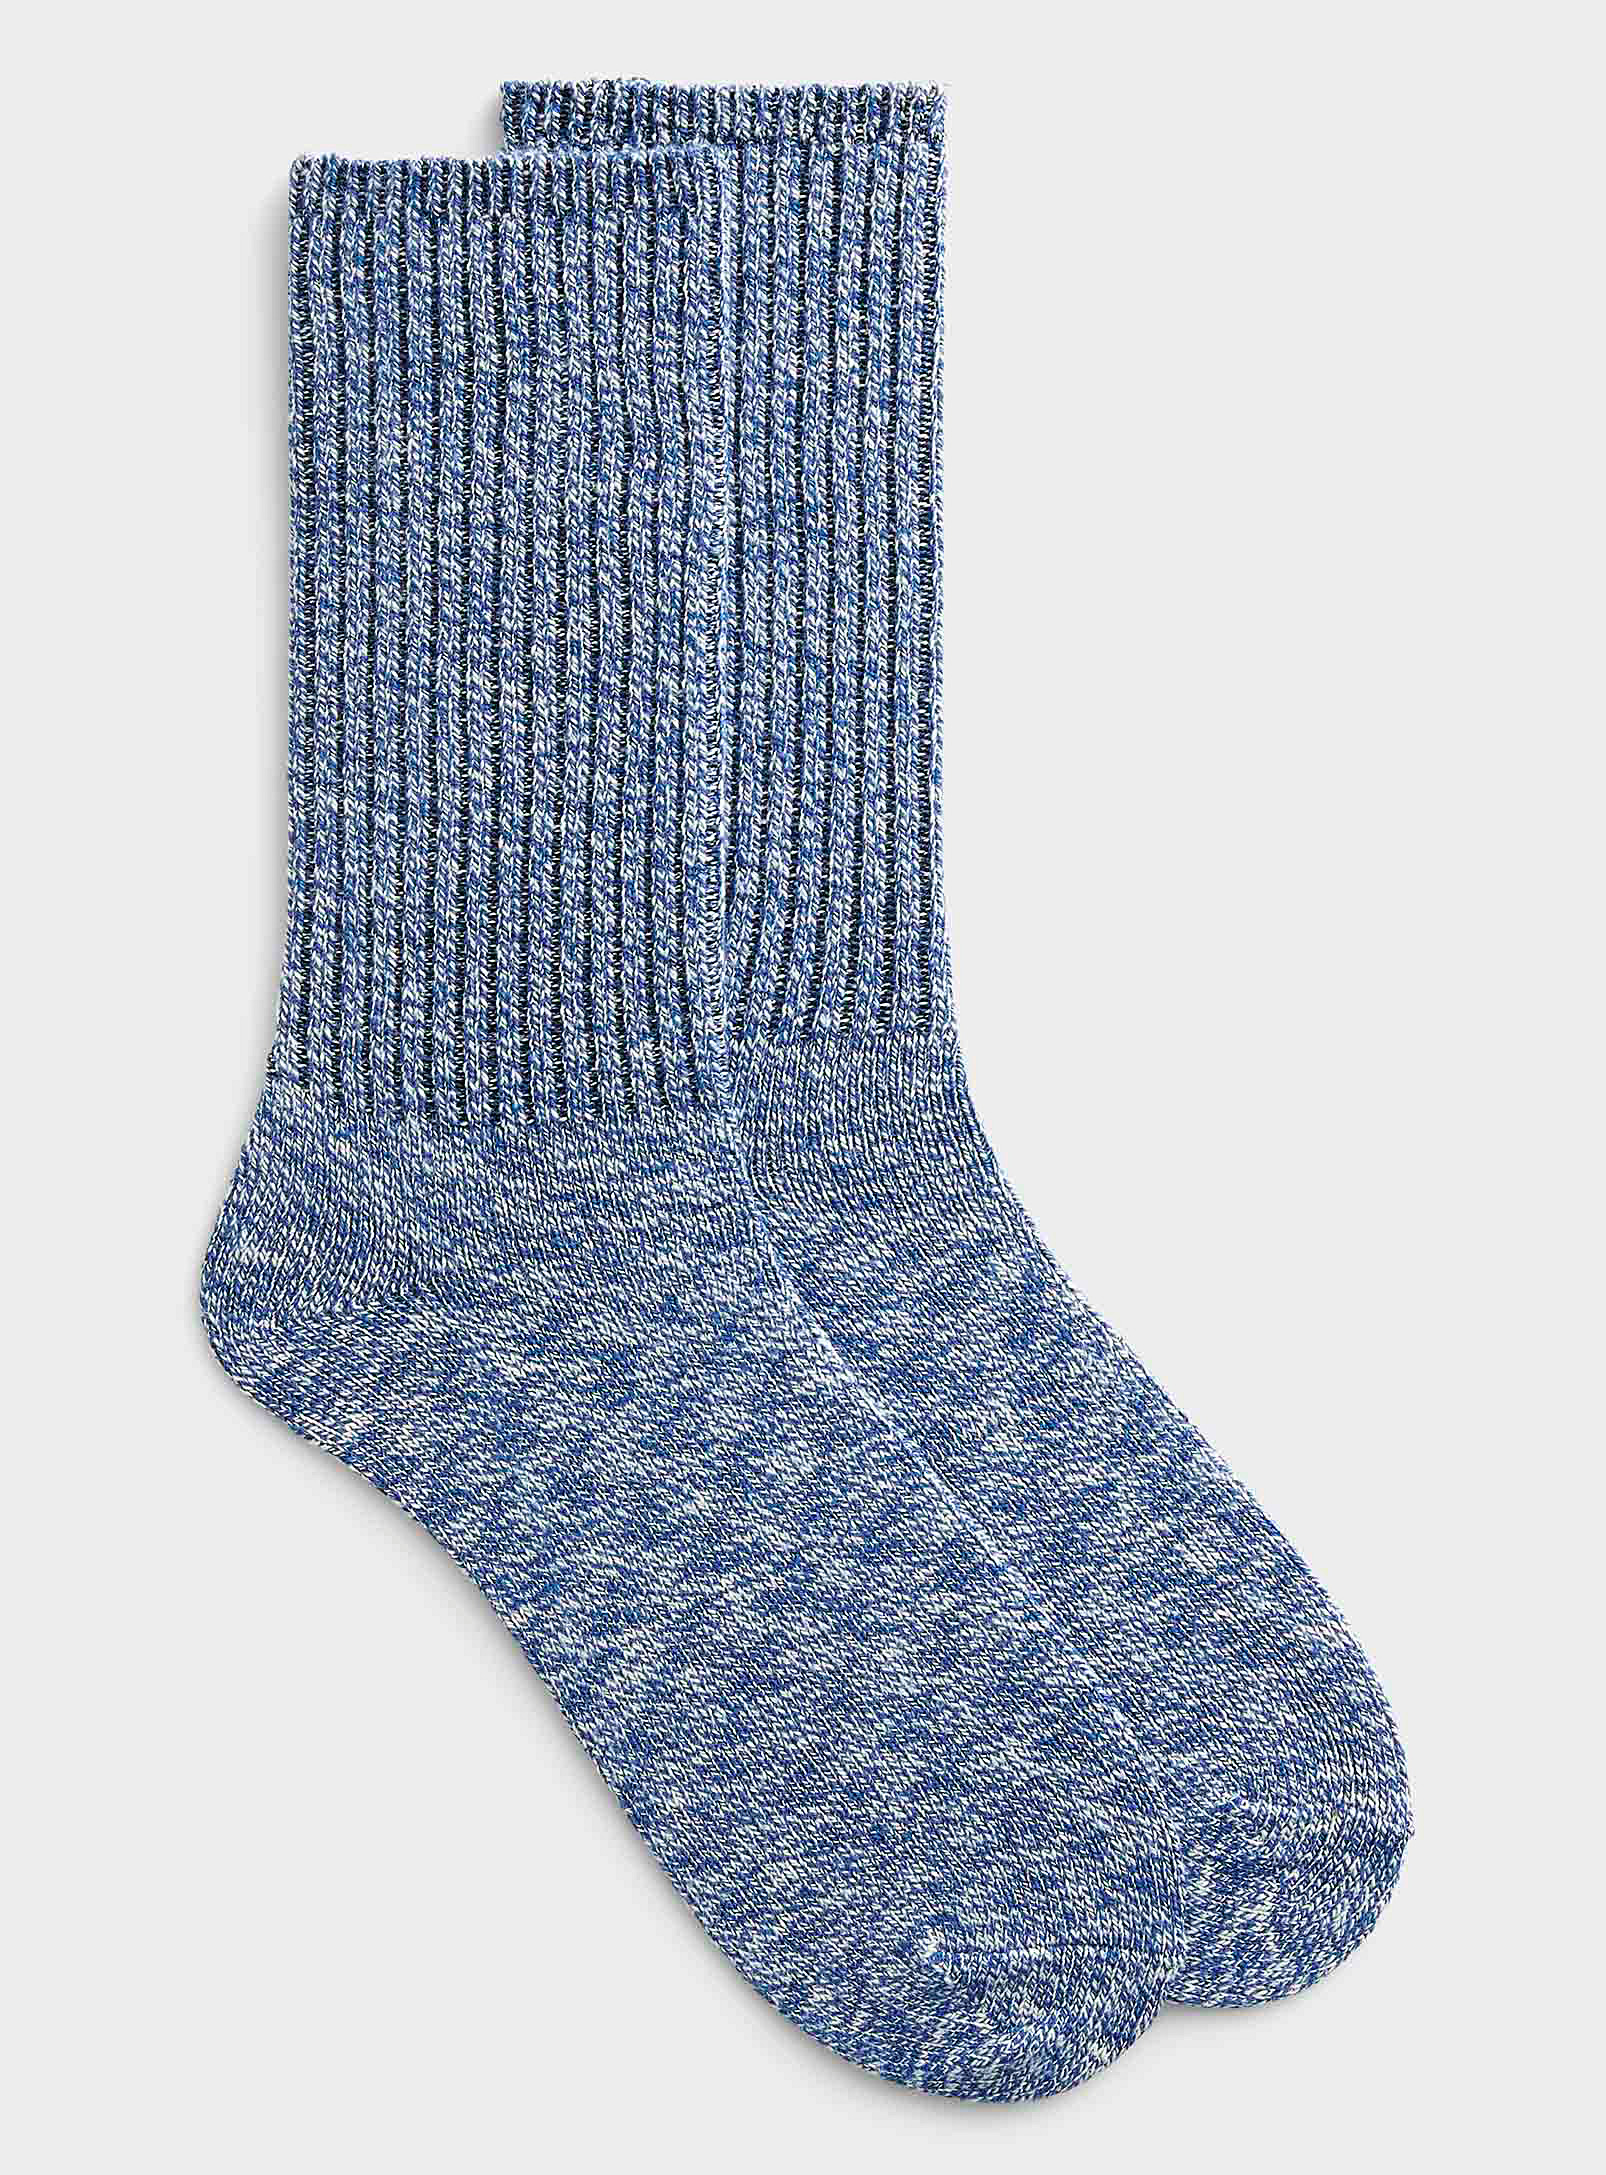 Mcgregor Weekender Socks In Patterned Blue